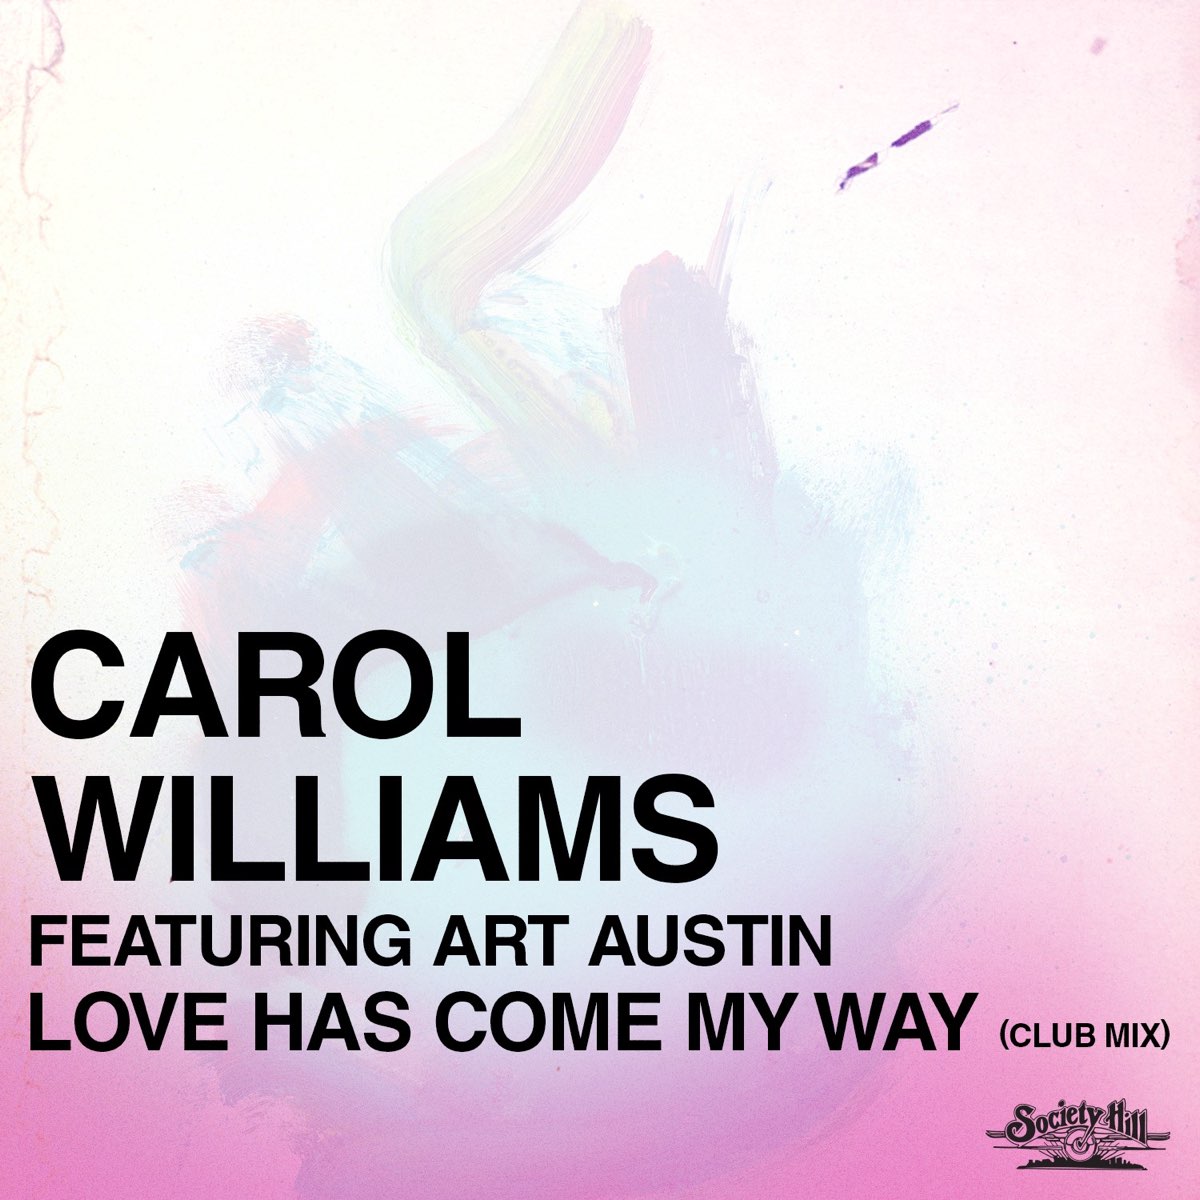 Tell lovely. Кэрол Уильямс Love is you. Кэрол Остин. My way истории и Love. Love is you by Carol Williams.